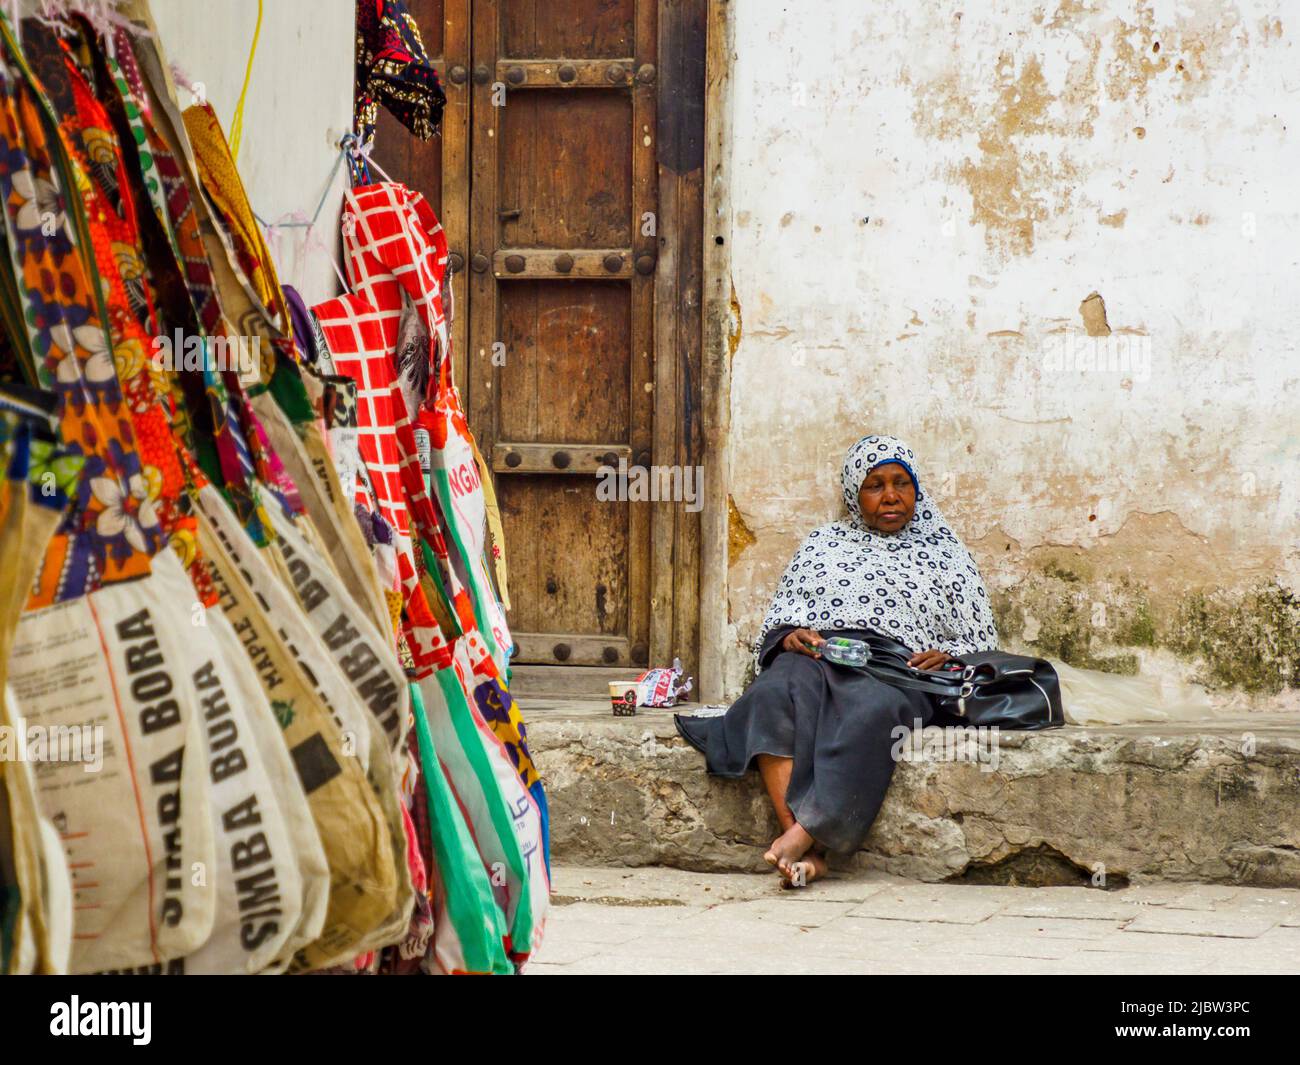 Città di pietra, Zanzibar, Tanzania - Gennaio 2021: Anziana donna africana pensiva seduta tra le mura di pietra della città africana Foto Stock